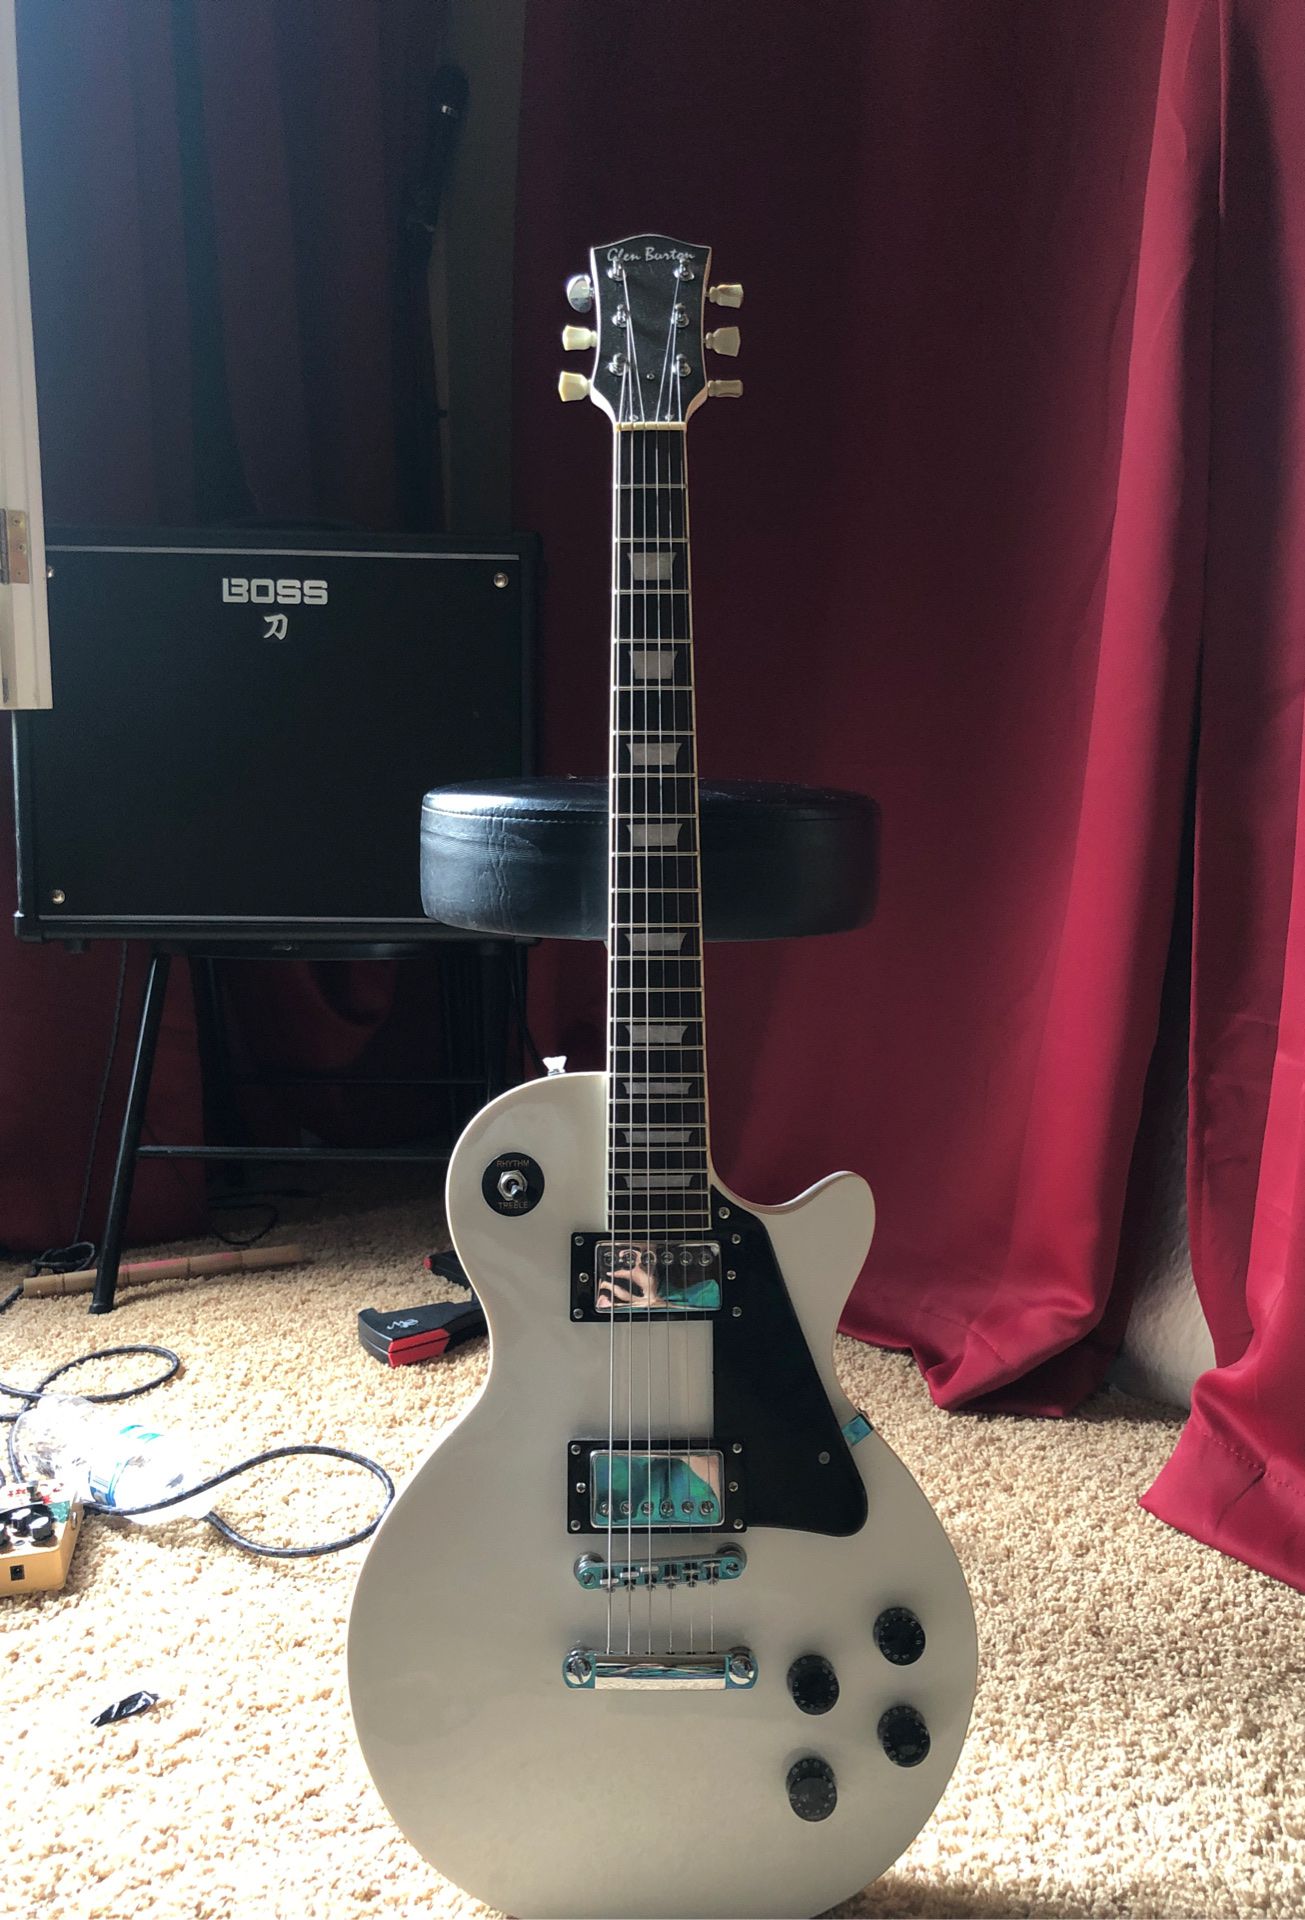 Les Paul model guitar